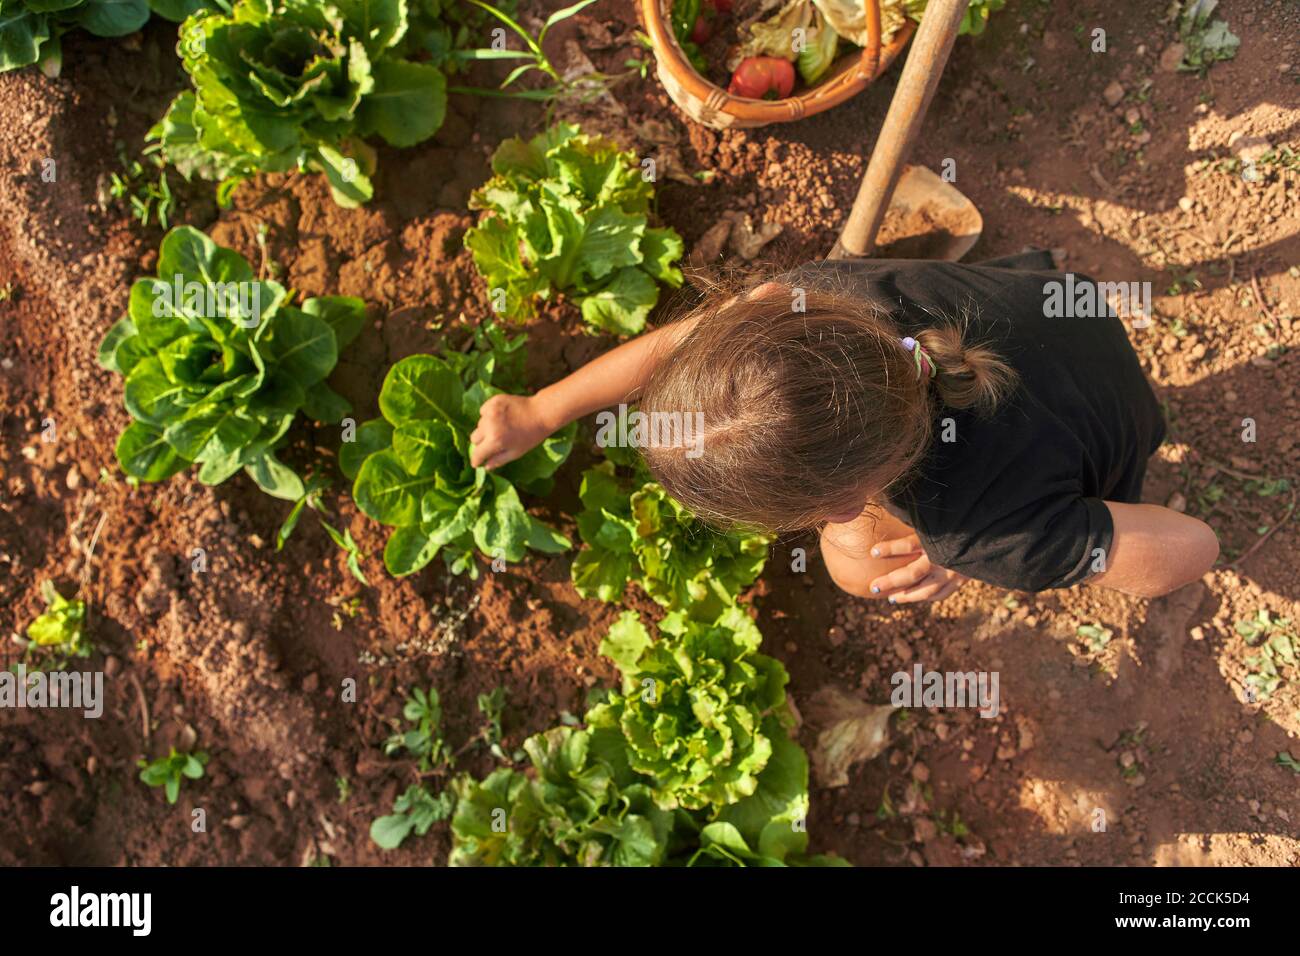 Girl harvesting lettuce in garden, from above Stock Photo